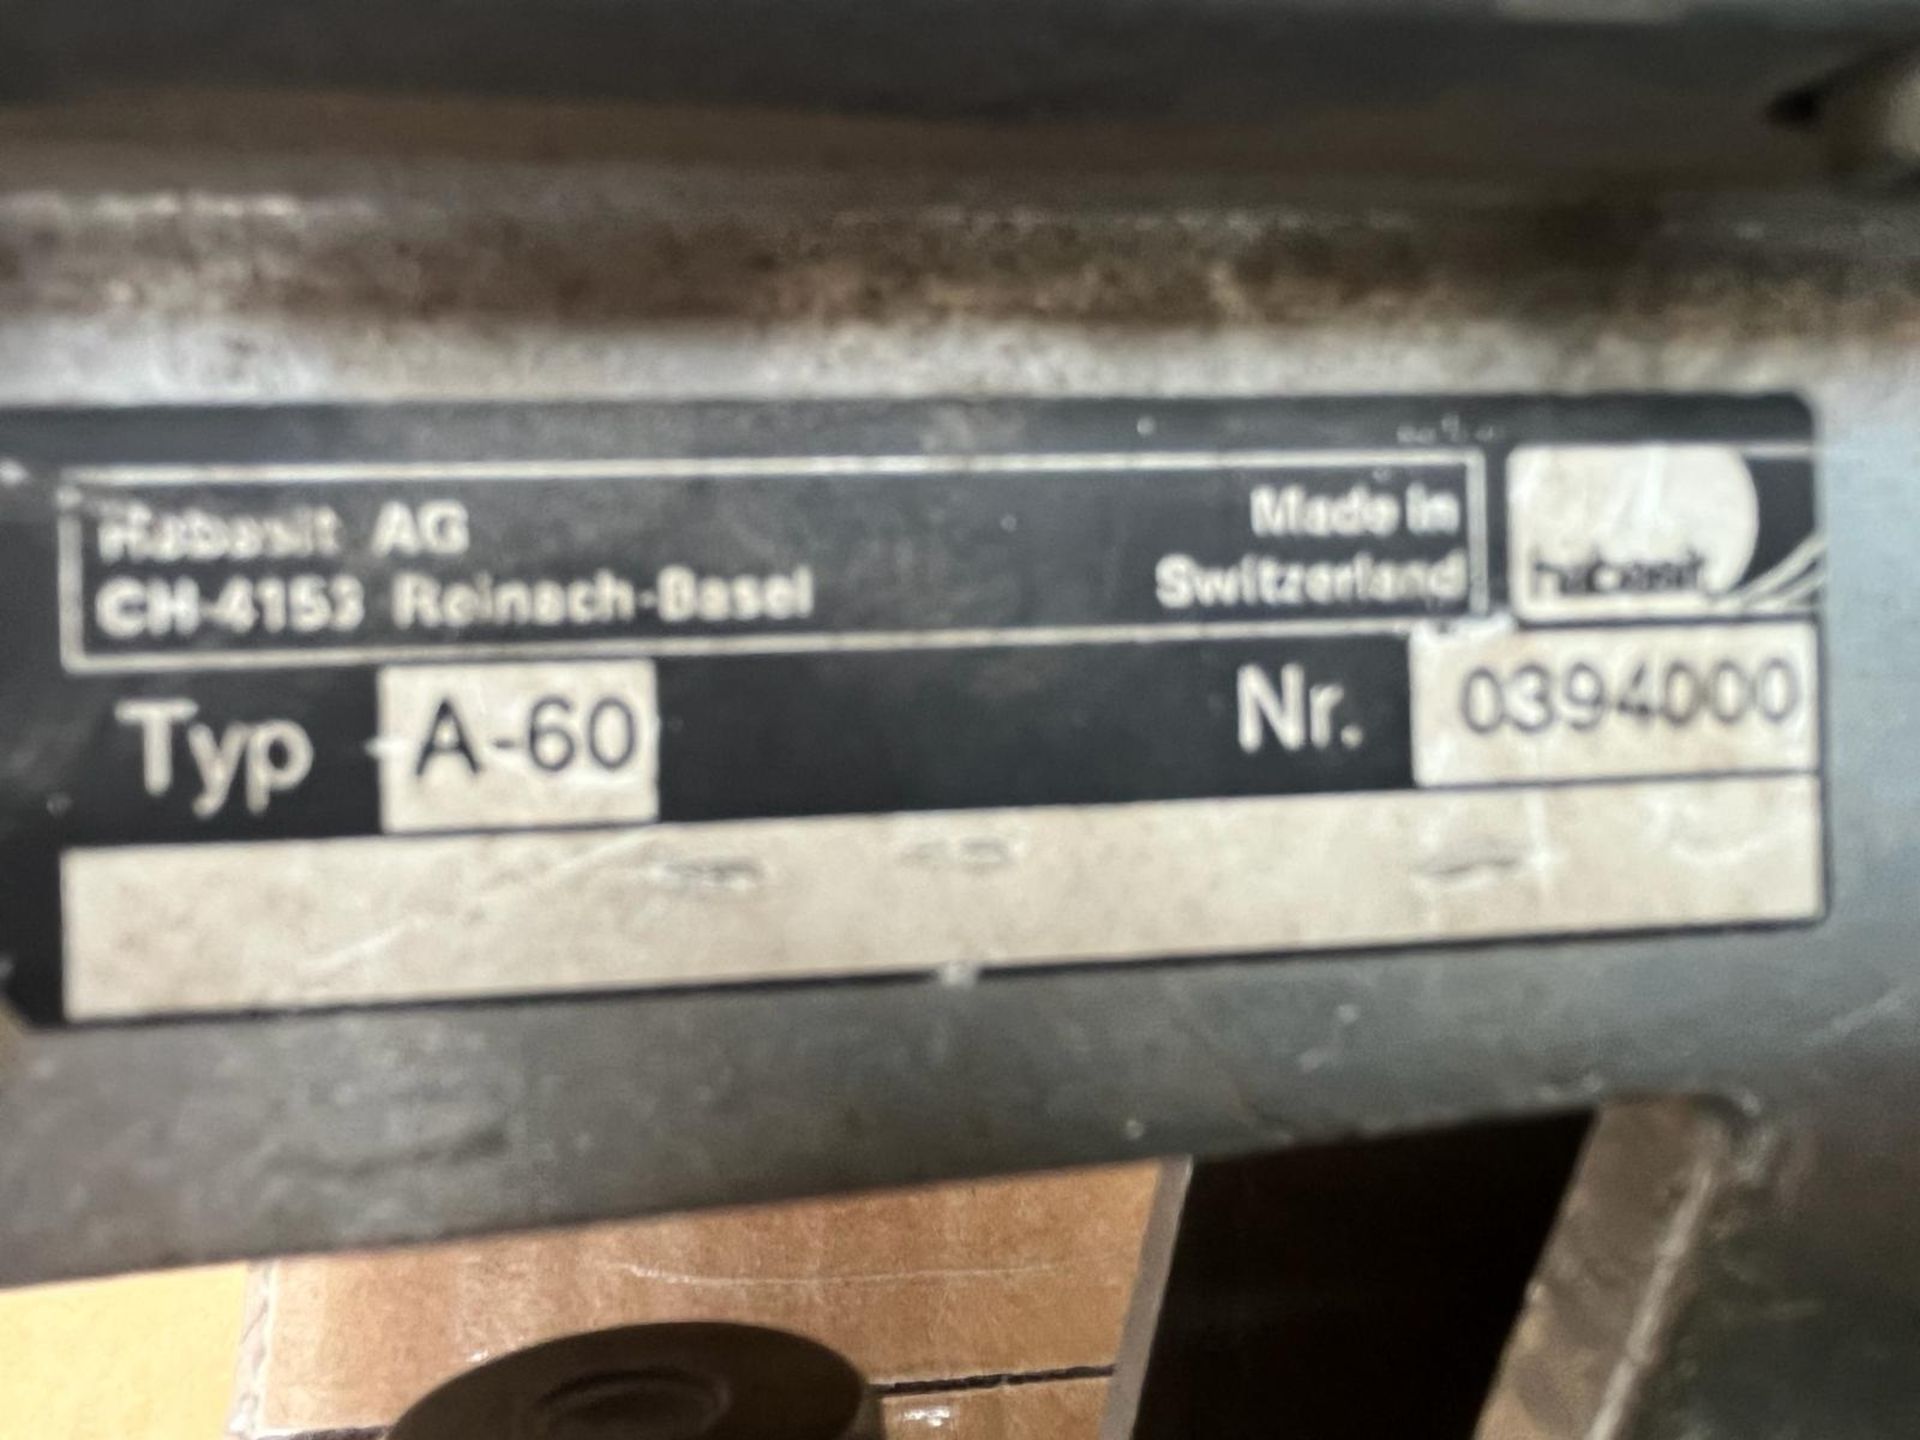 Habasit A-60 Belt Grinder and Belt Heater, with qu - Image 4 of 8